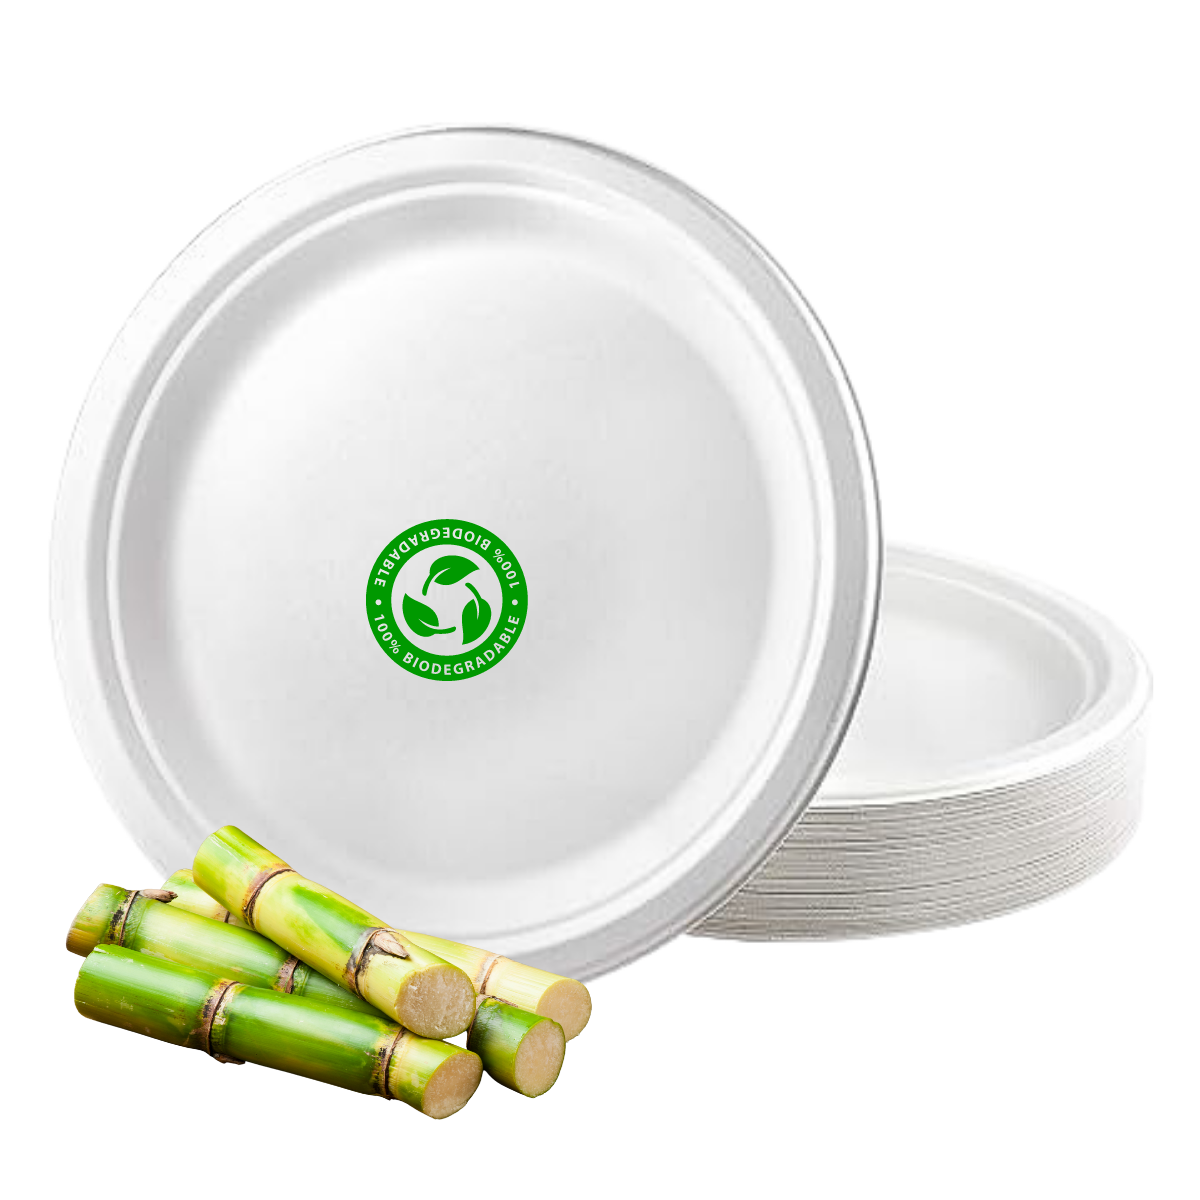 Platos blancos desechables biodegradable